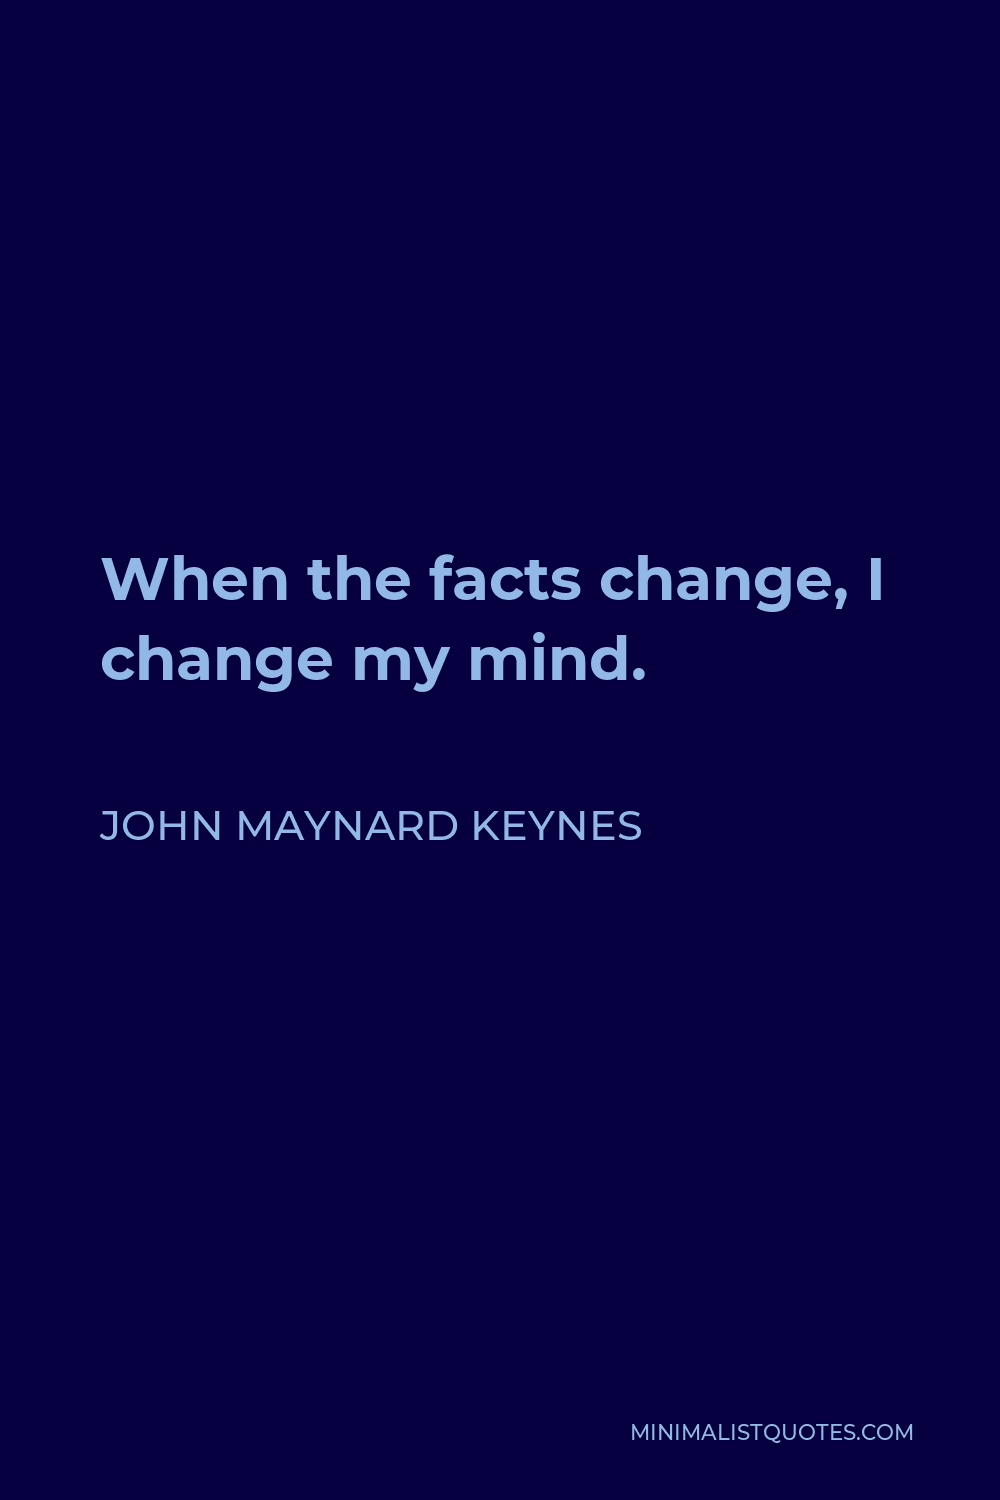 John Maynard Keynes Quote - When the facts change, I change my mind.